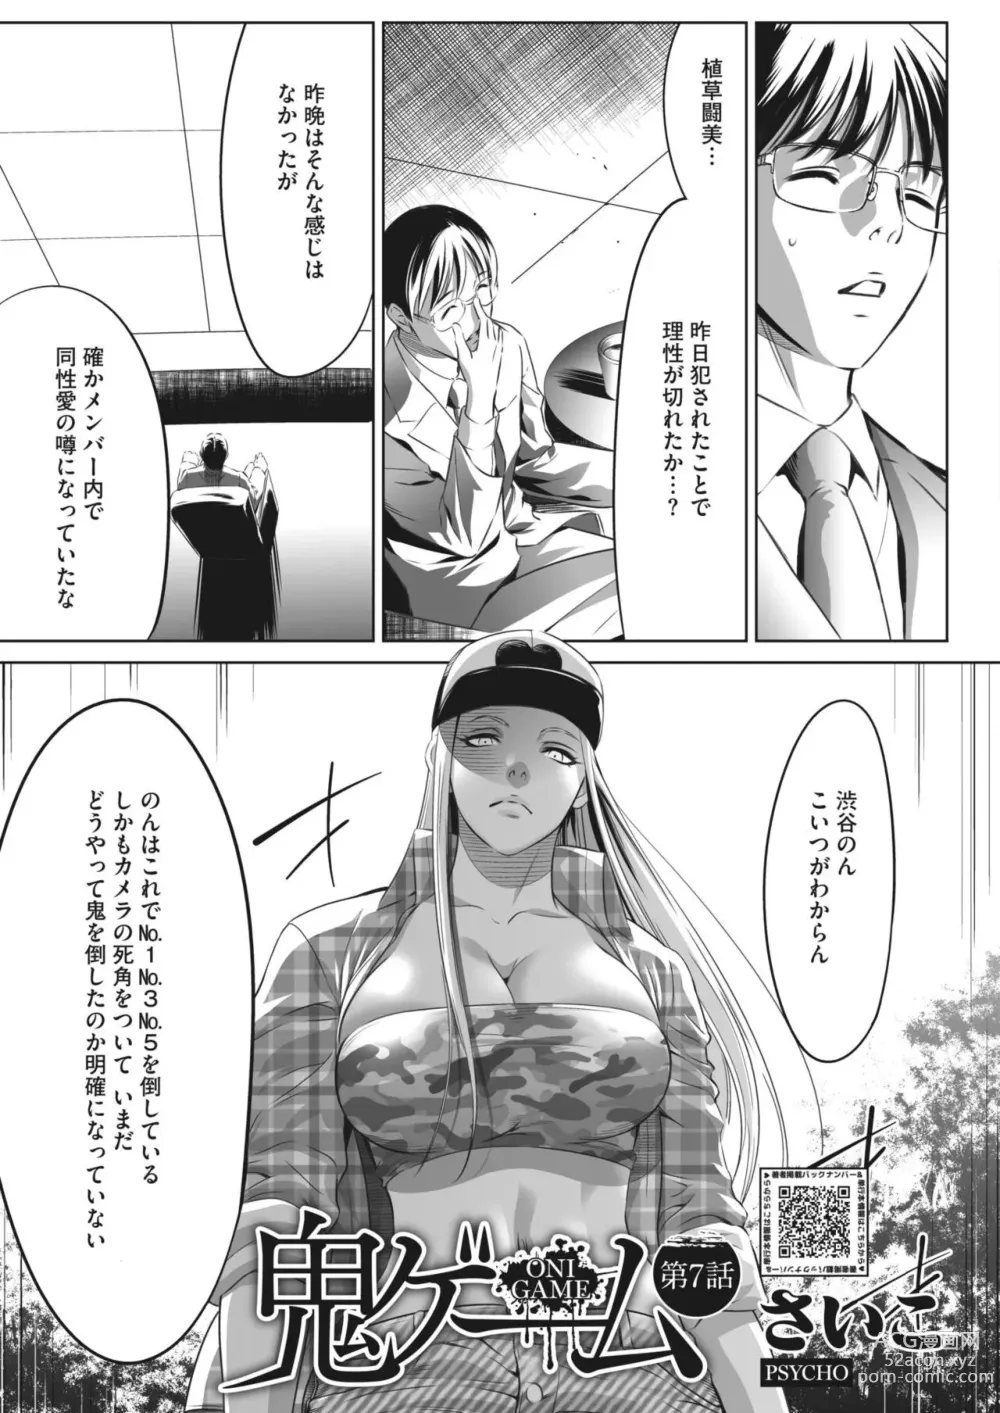 Page 3 of manga Oni Game Ch.7